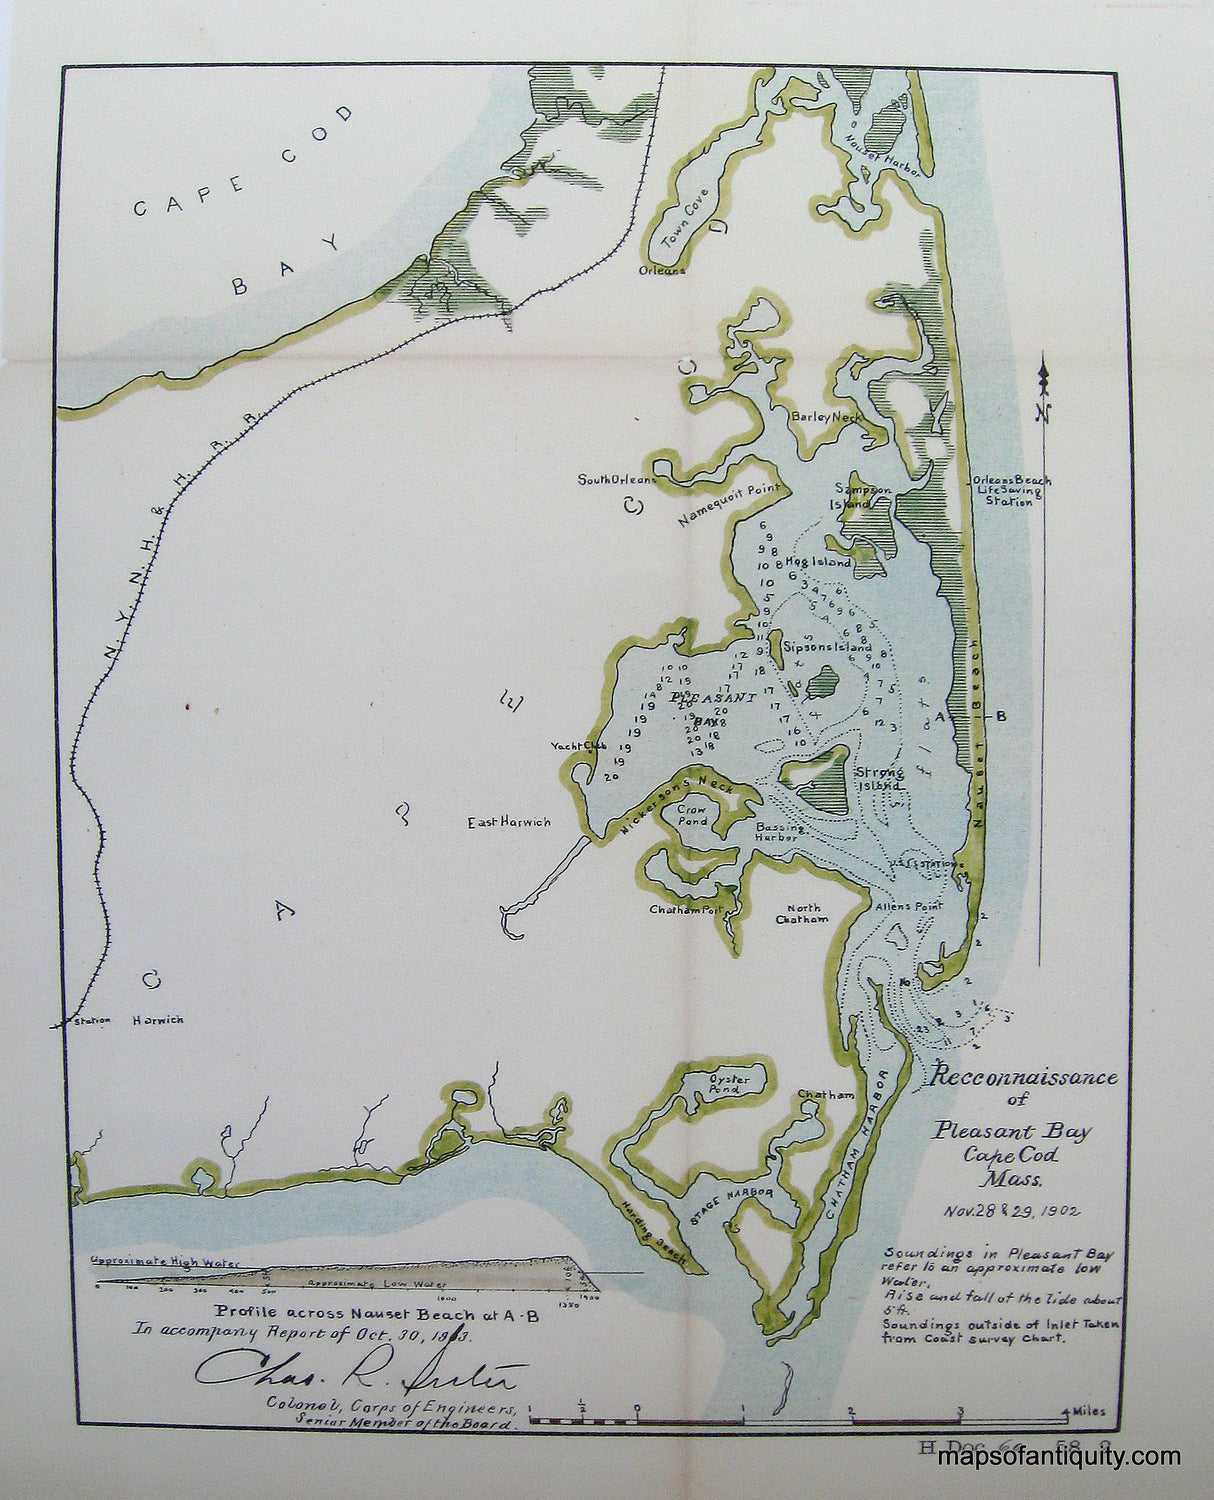 Reproduction-Map-Reconnaissance-of-Pleasant-Bay-Cape-Cod-Mass.-1902